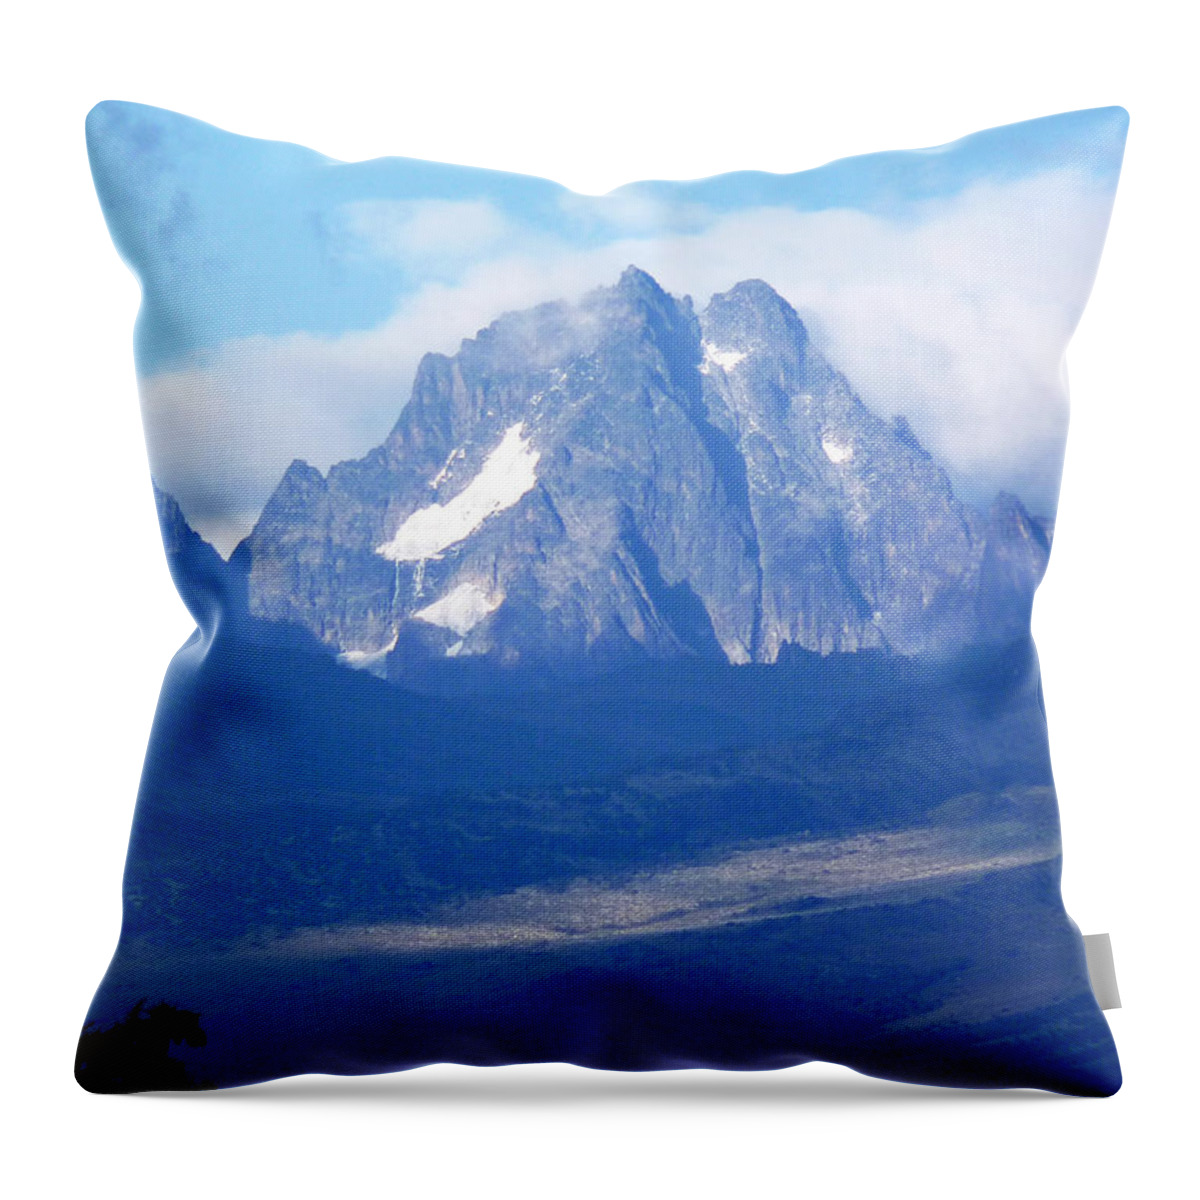 Mount Kenya Throw Pillow featuring the photograph Mount Kenya by Tony Murtagh